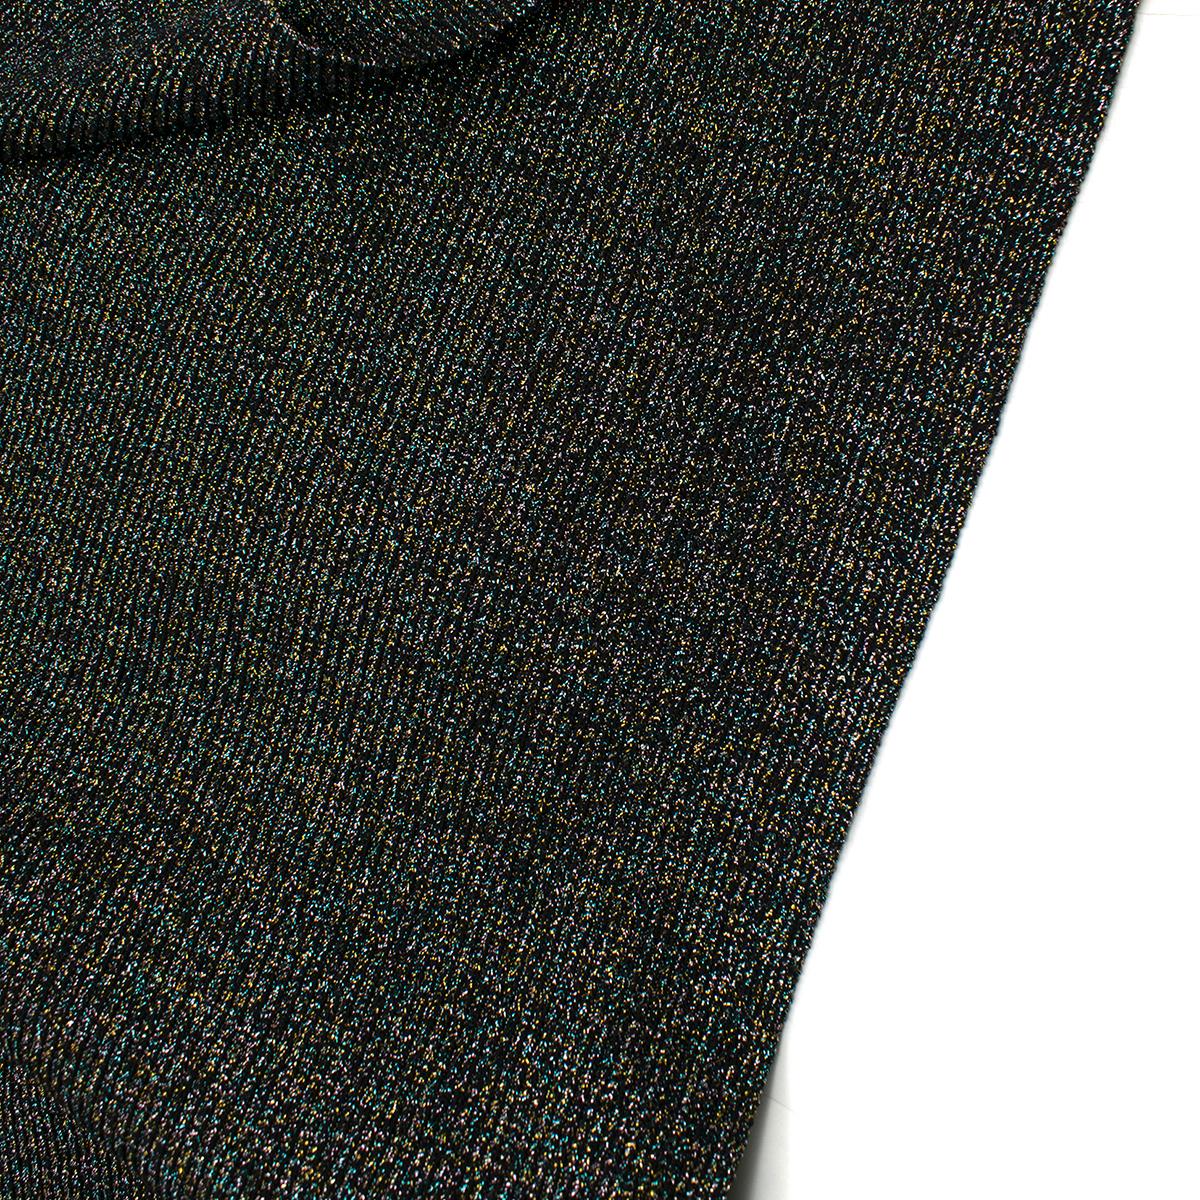 Balenciaga Metallic Knit Cropped Sweater and Skirt Set Size: S 3